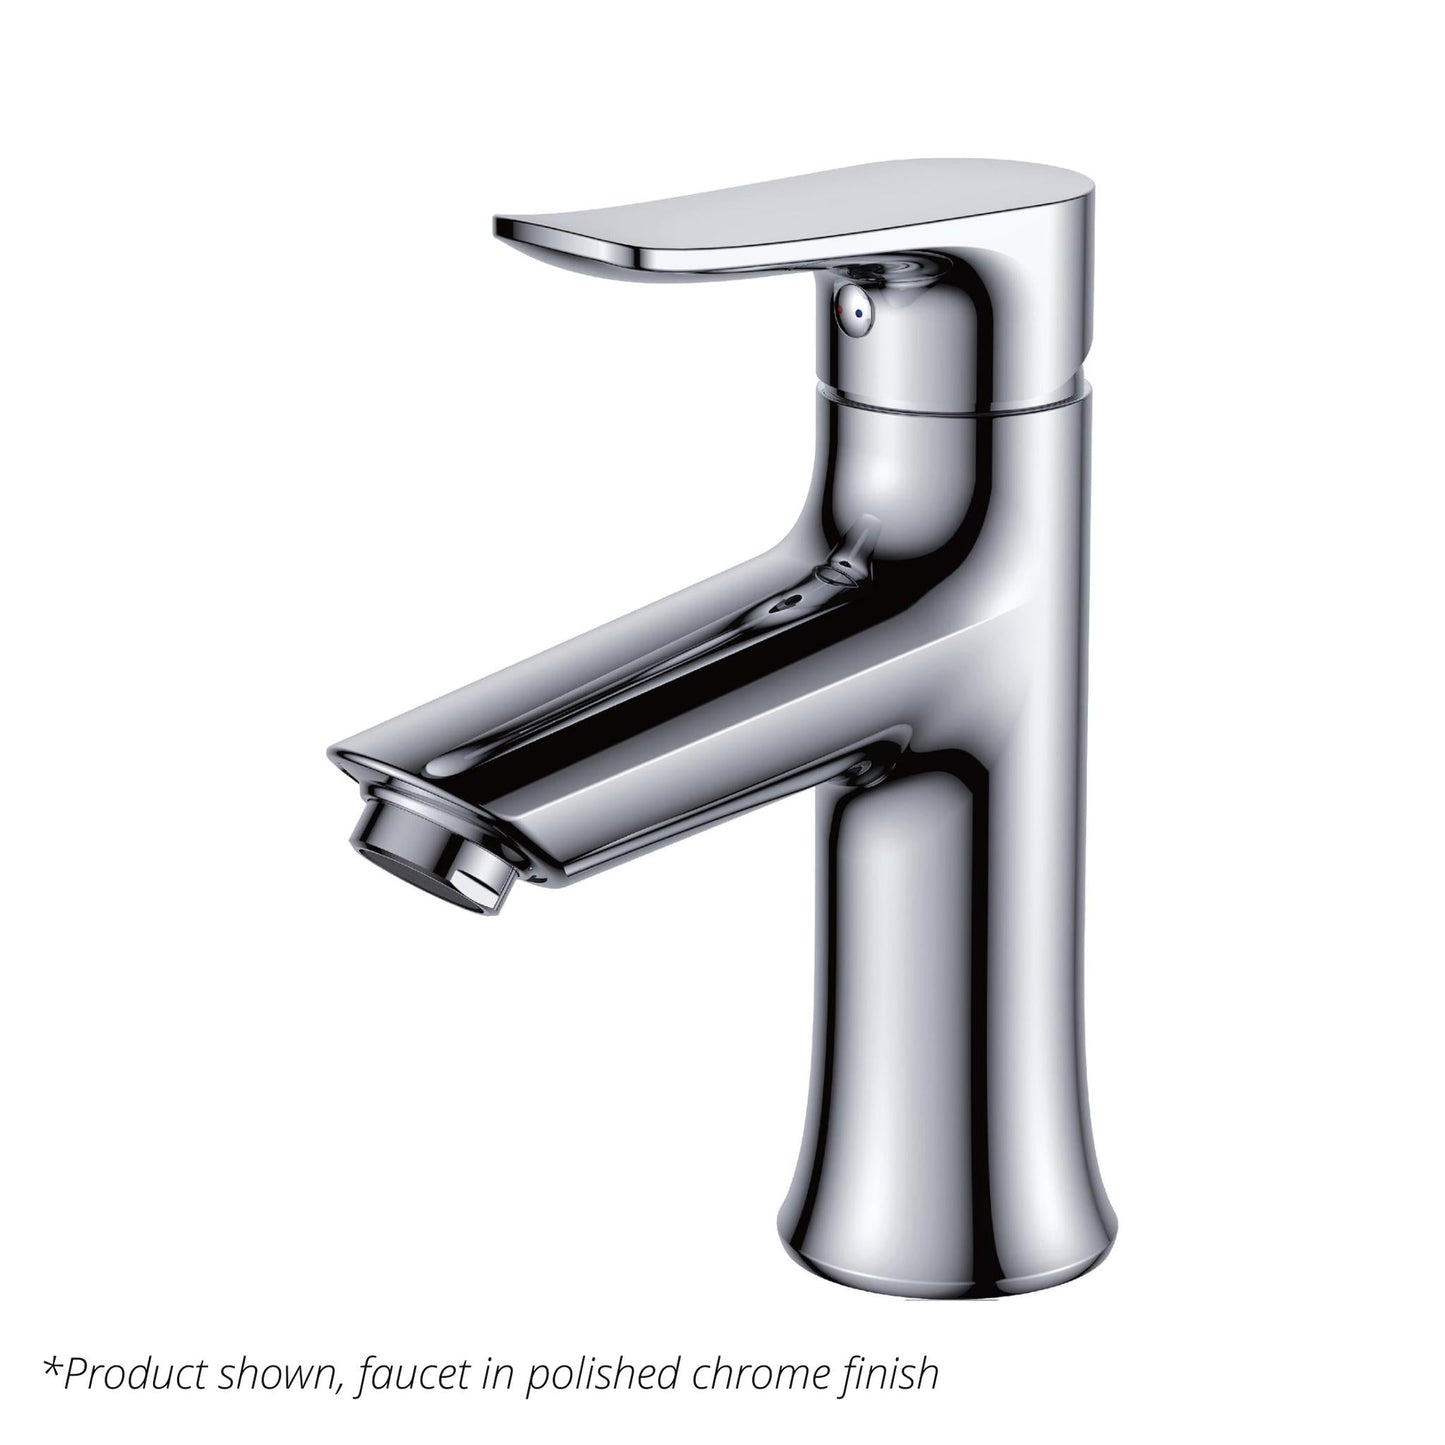 Duko FC354001 Single Handle Faucet in Chrome